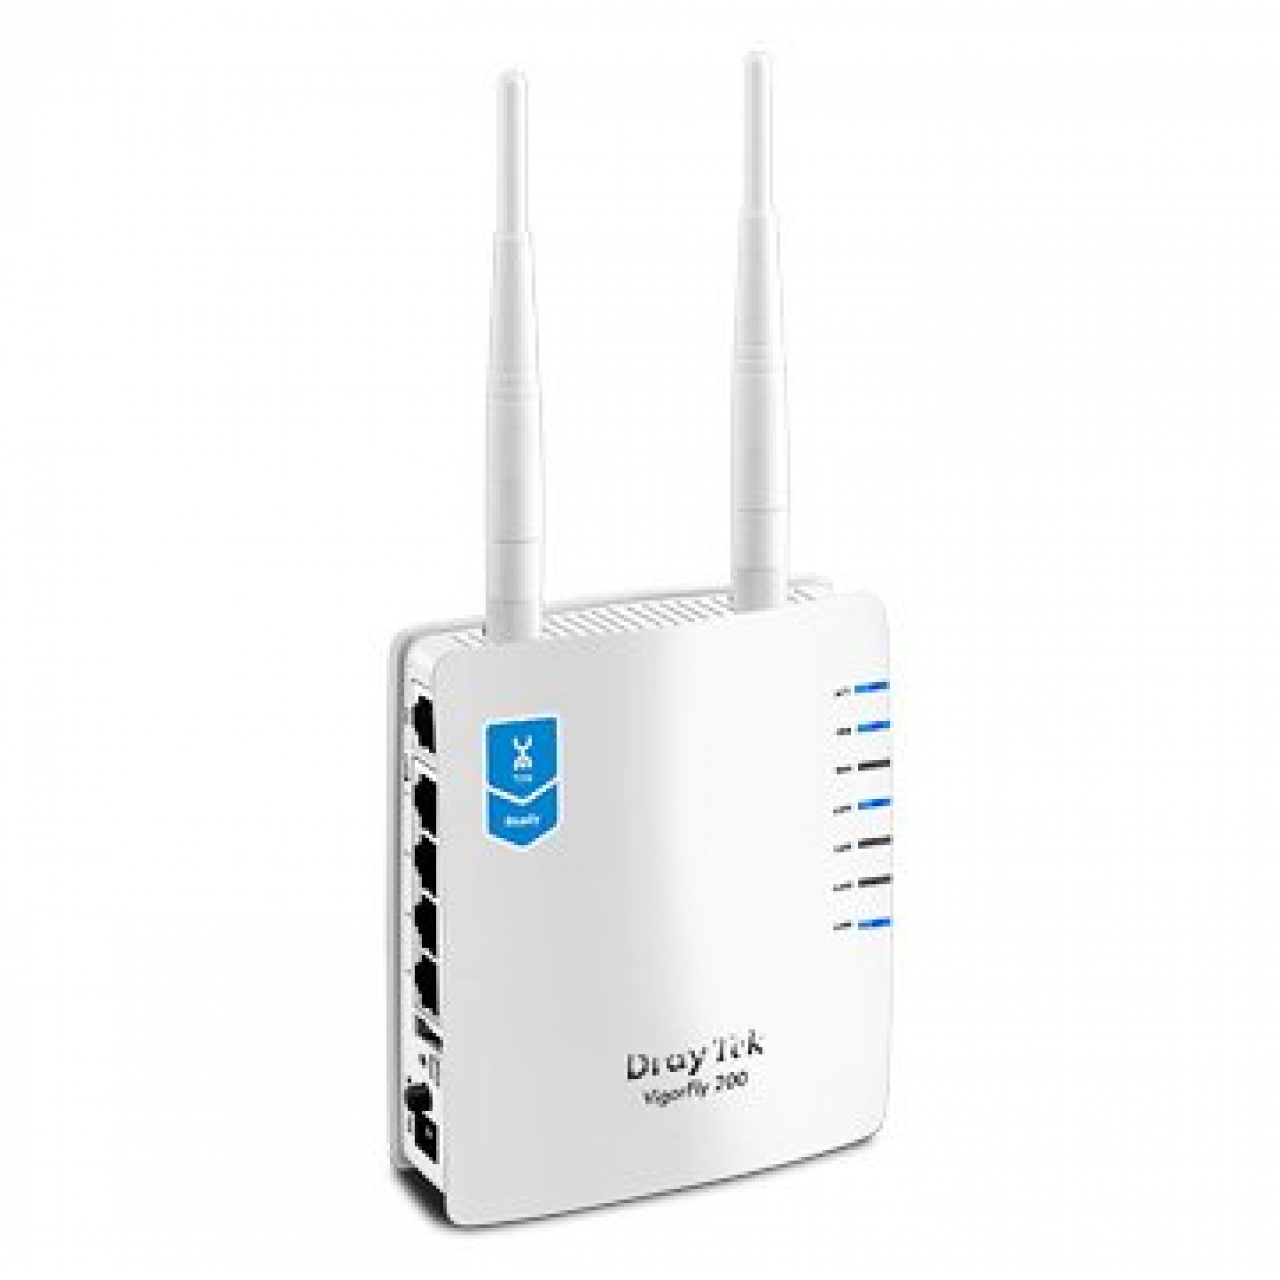 DRAYTEK VigorFly 210 Wireless Router 300Mbps 4 Port Ethernet - 1 Port WAN - 1